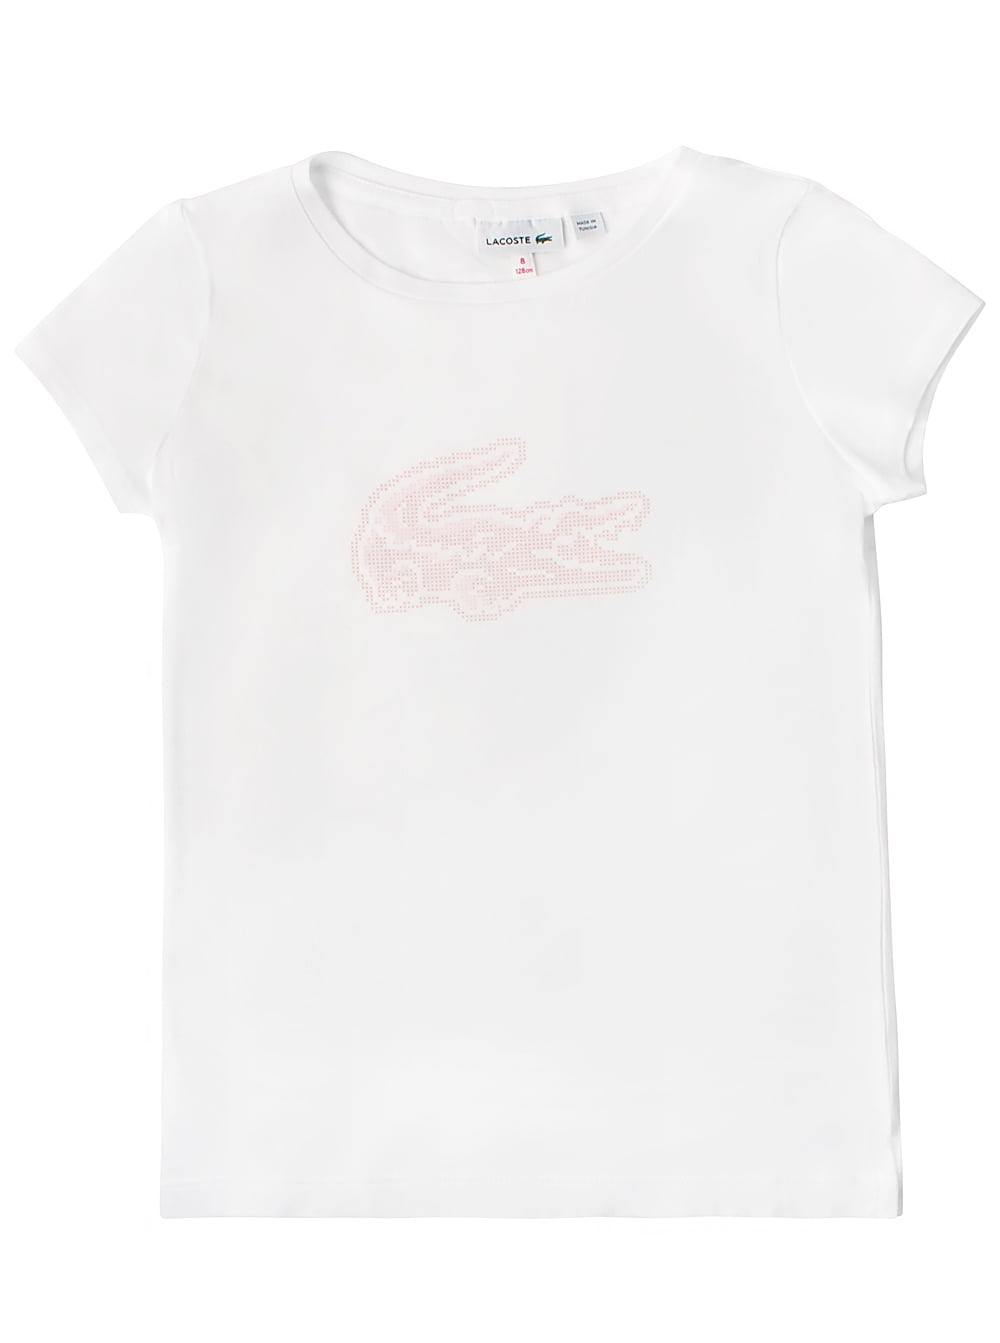 udløb Sociale Studier brugerdefinerede Lacoste Kids Needlepoint Croc Graphic T-Shirt in White - Walmart.com